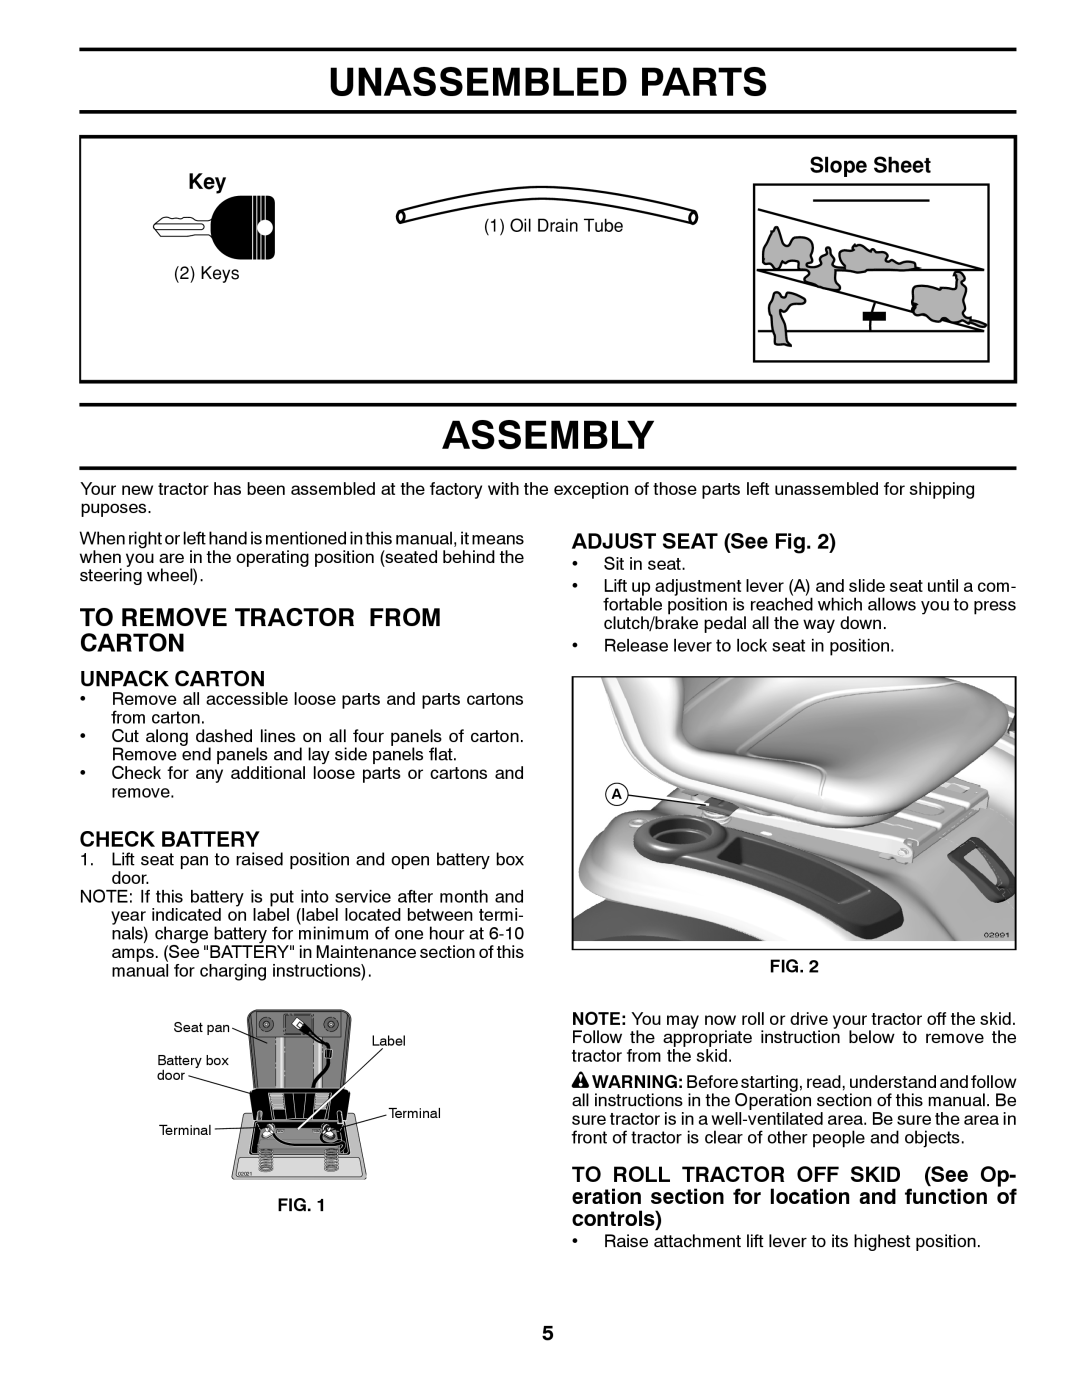 Husqvarna YTH2246 owner manual Unassembled Parts, Assembly, To Remove Tractor From Carton, Slope Sheet Key, Unpack Carton 